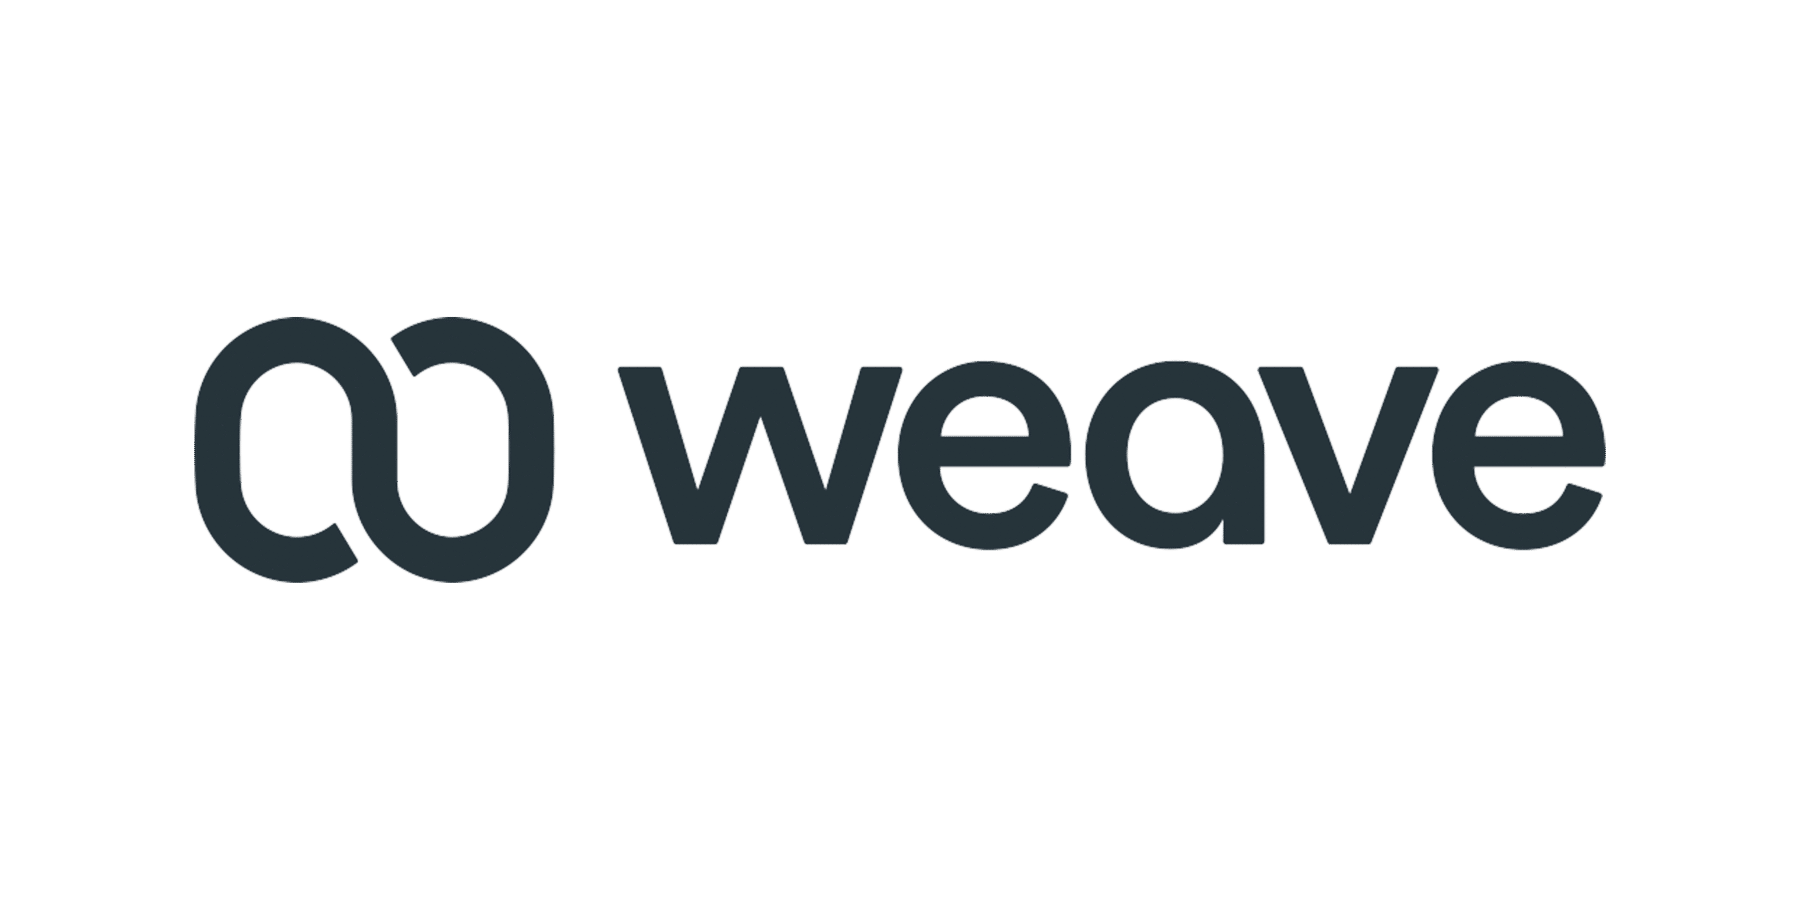 weave logo